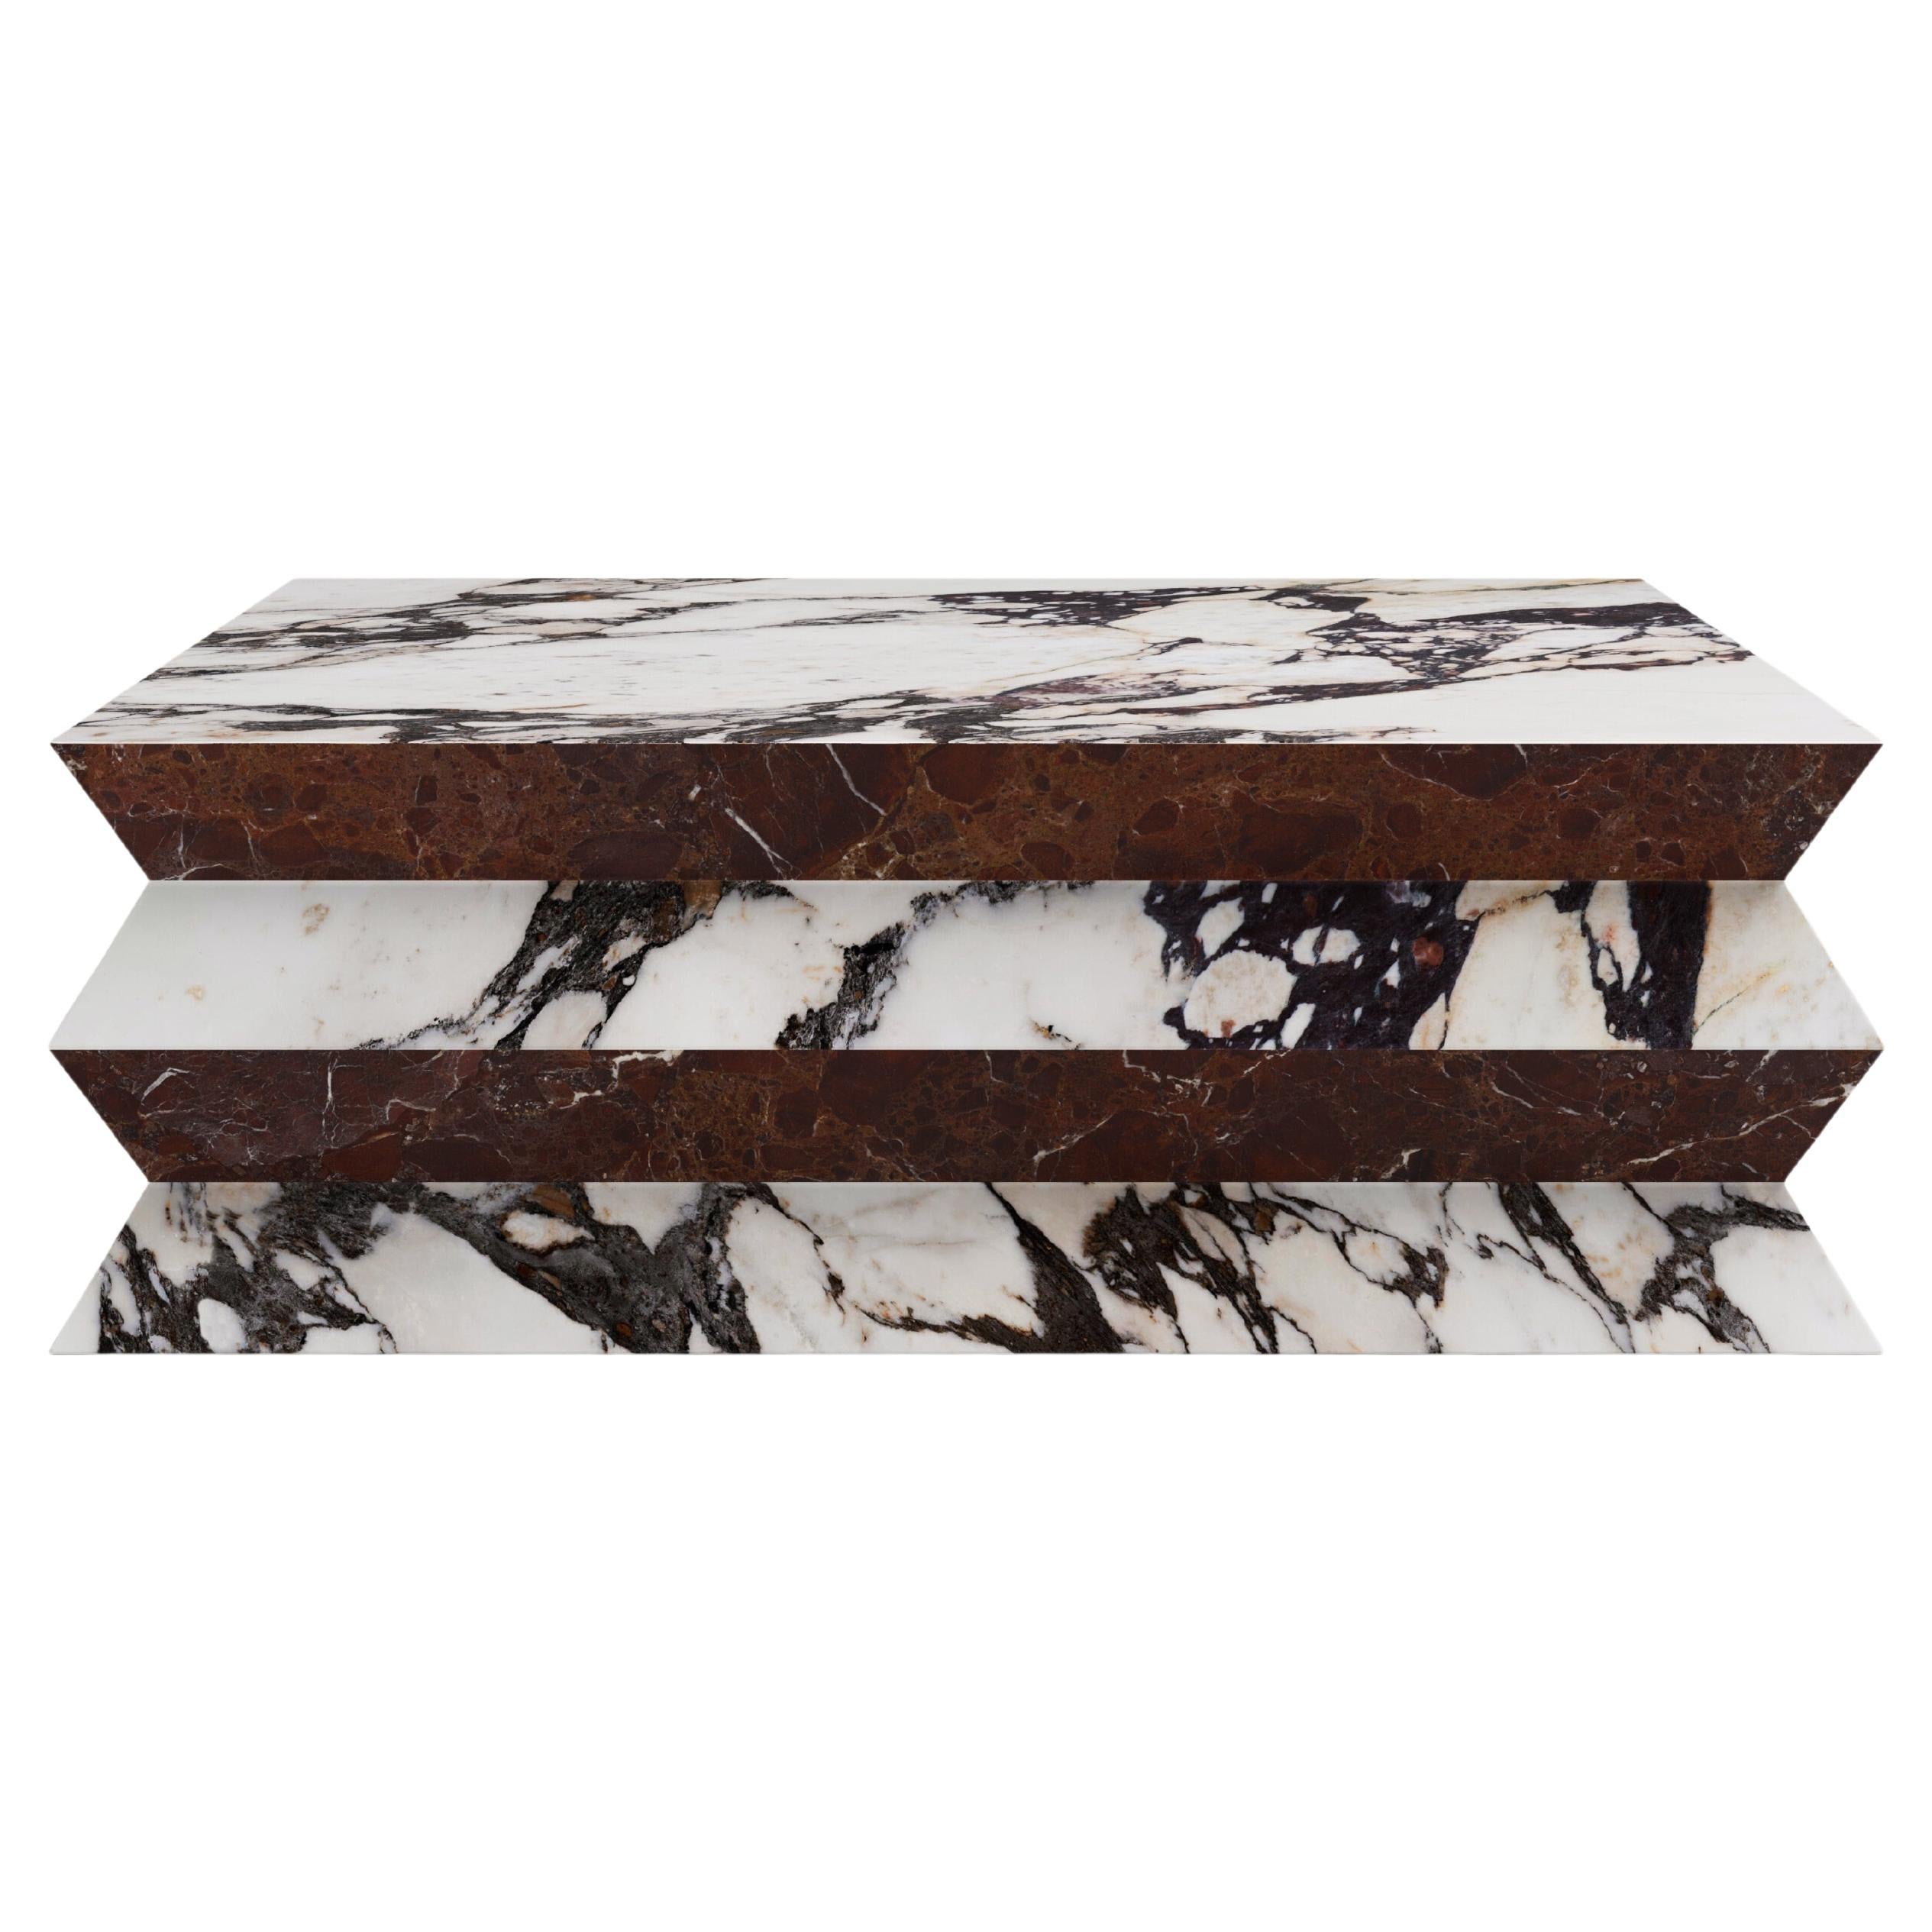 FORM(LA) table basse carrée Grinza 60 po. (L) x 60 po. (L) x 16 po. (H) marbre Calacatta Viola en vente